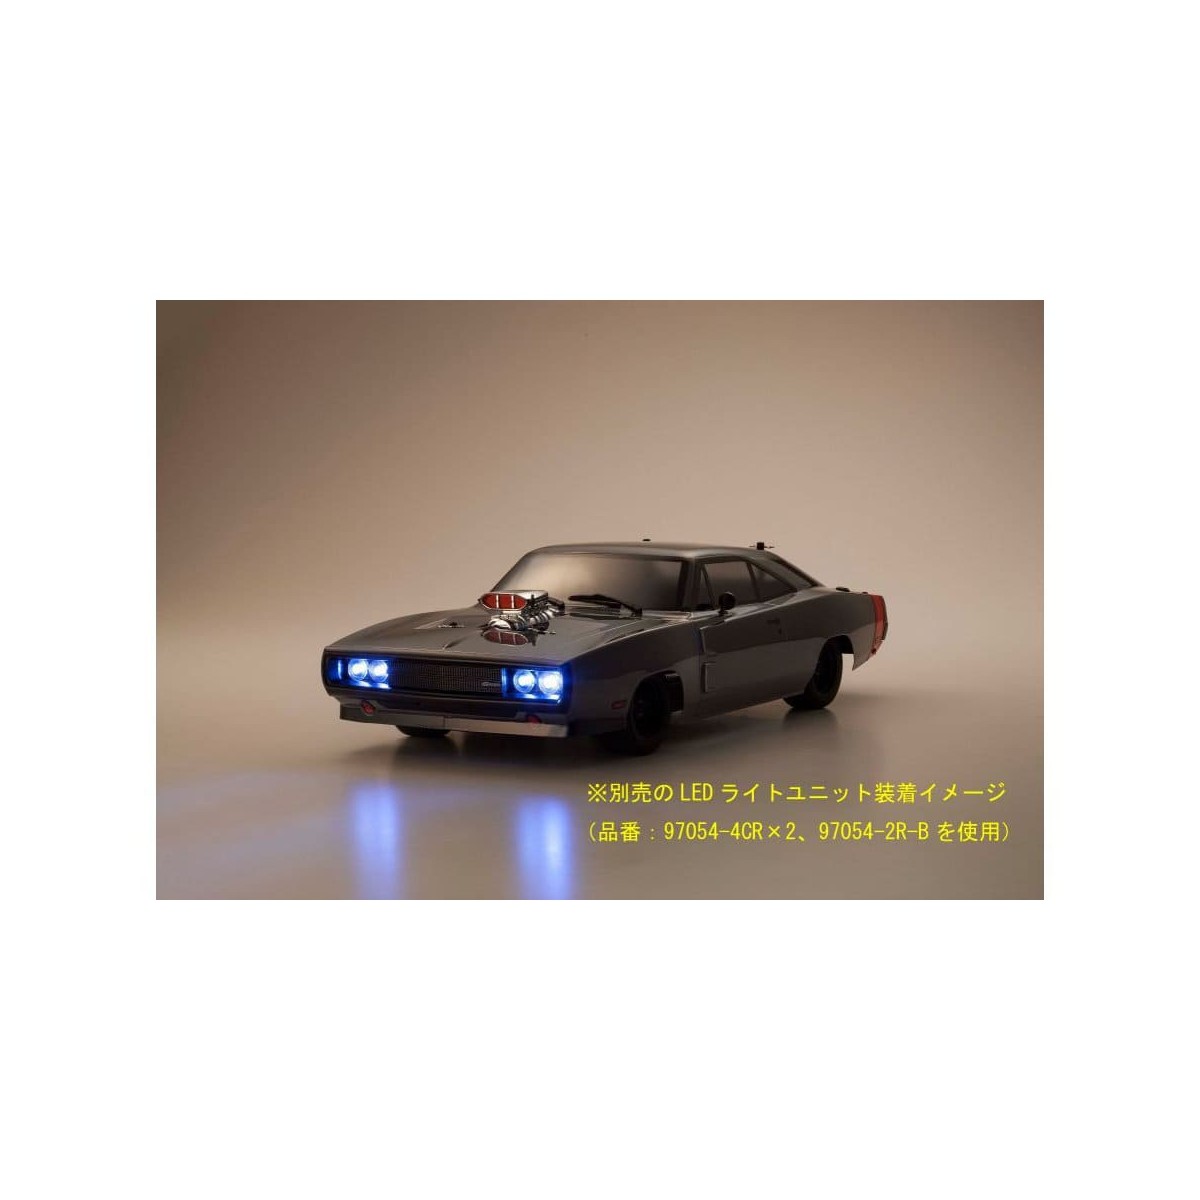 Fast n Furious Dominics 1979 Car Model Kit Toys Games Hobby Kids Tires Engine 